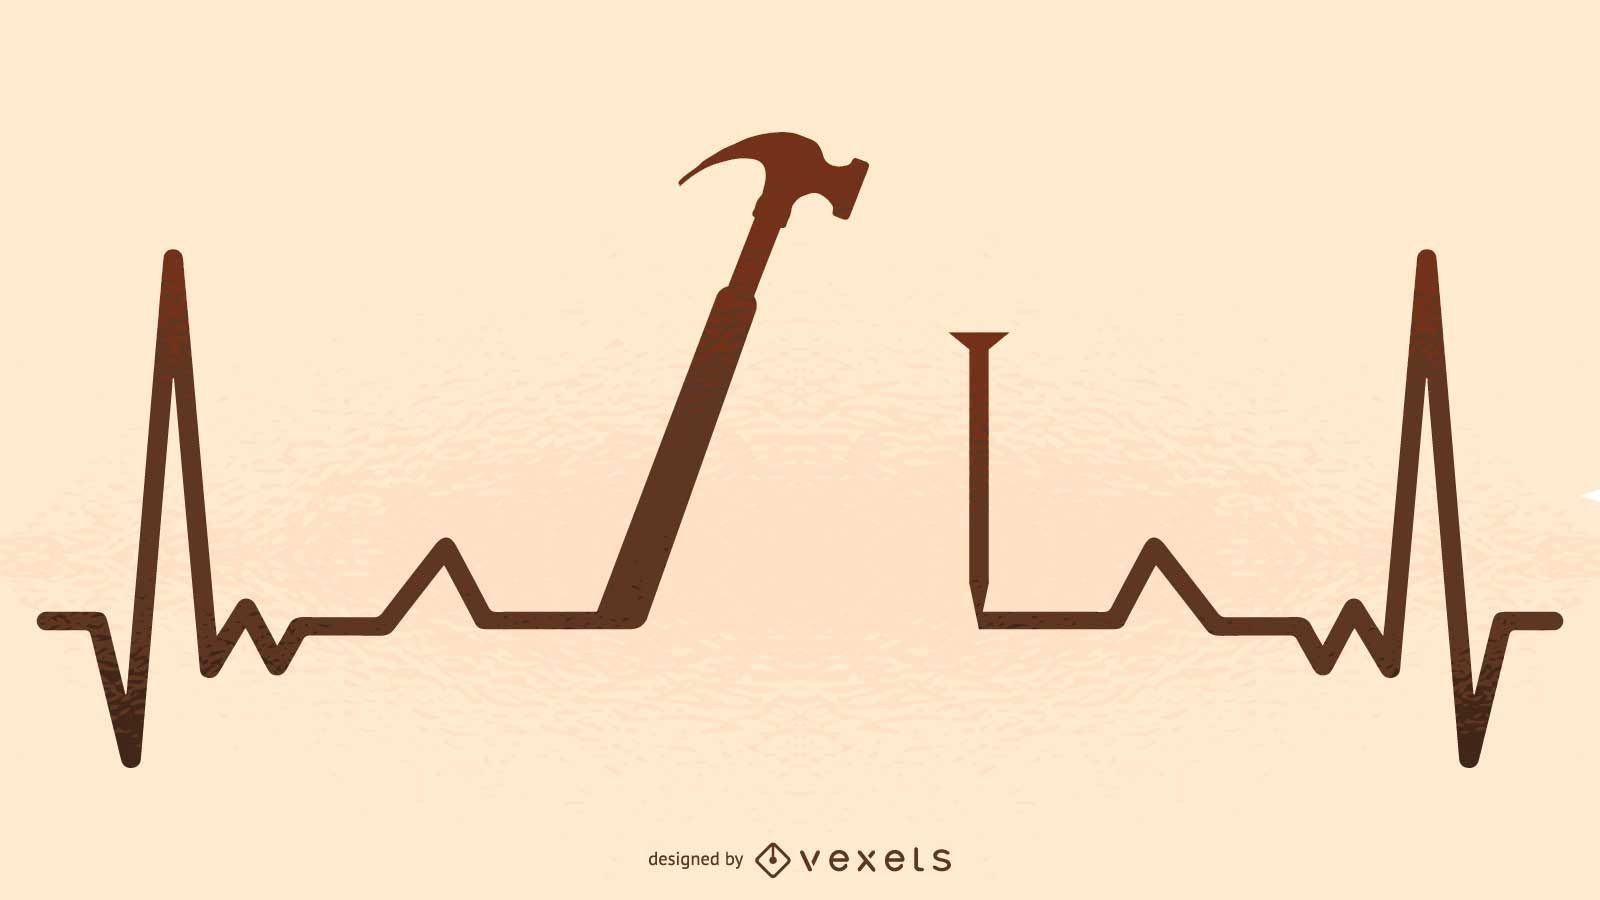 Hammer heartbeat illustration silhouette